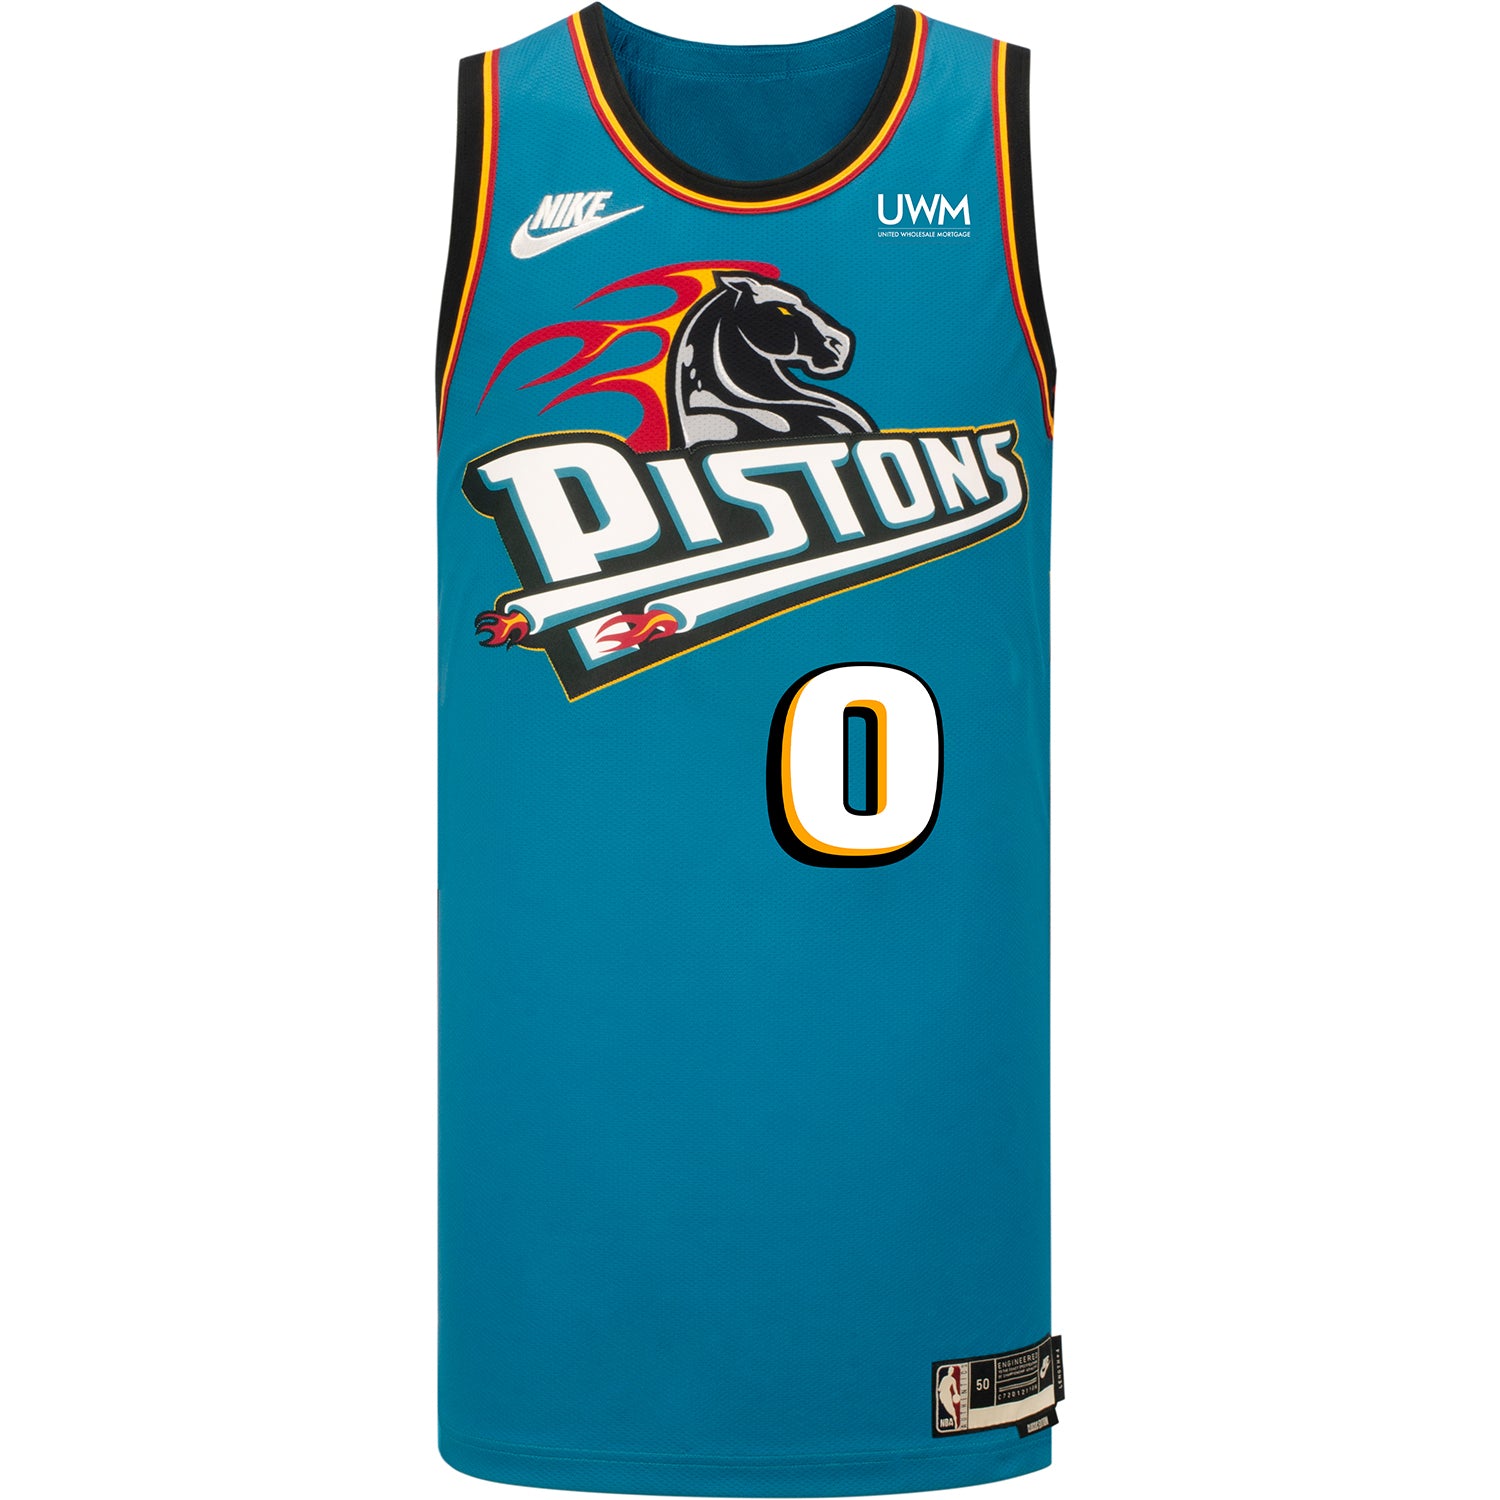 Detroit Pistons' teal jerseys return as Classic option for next season